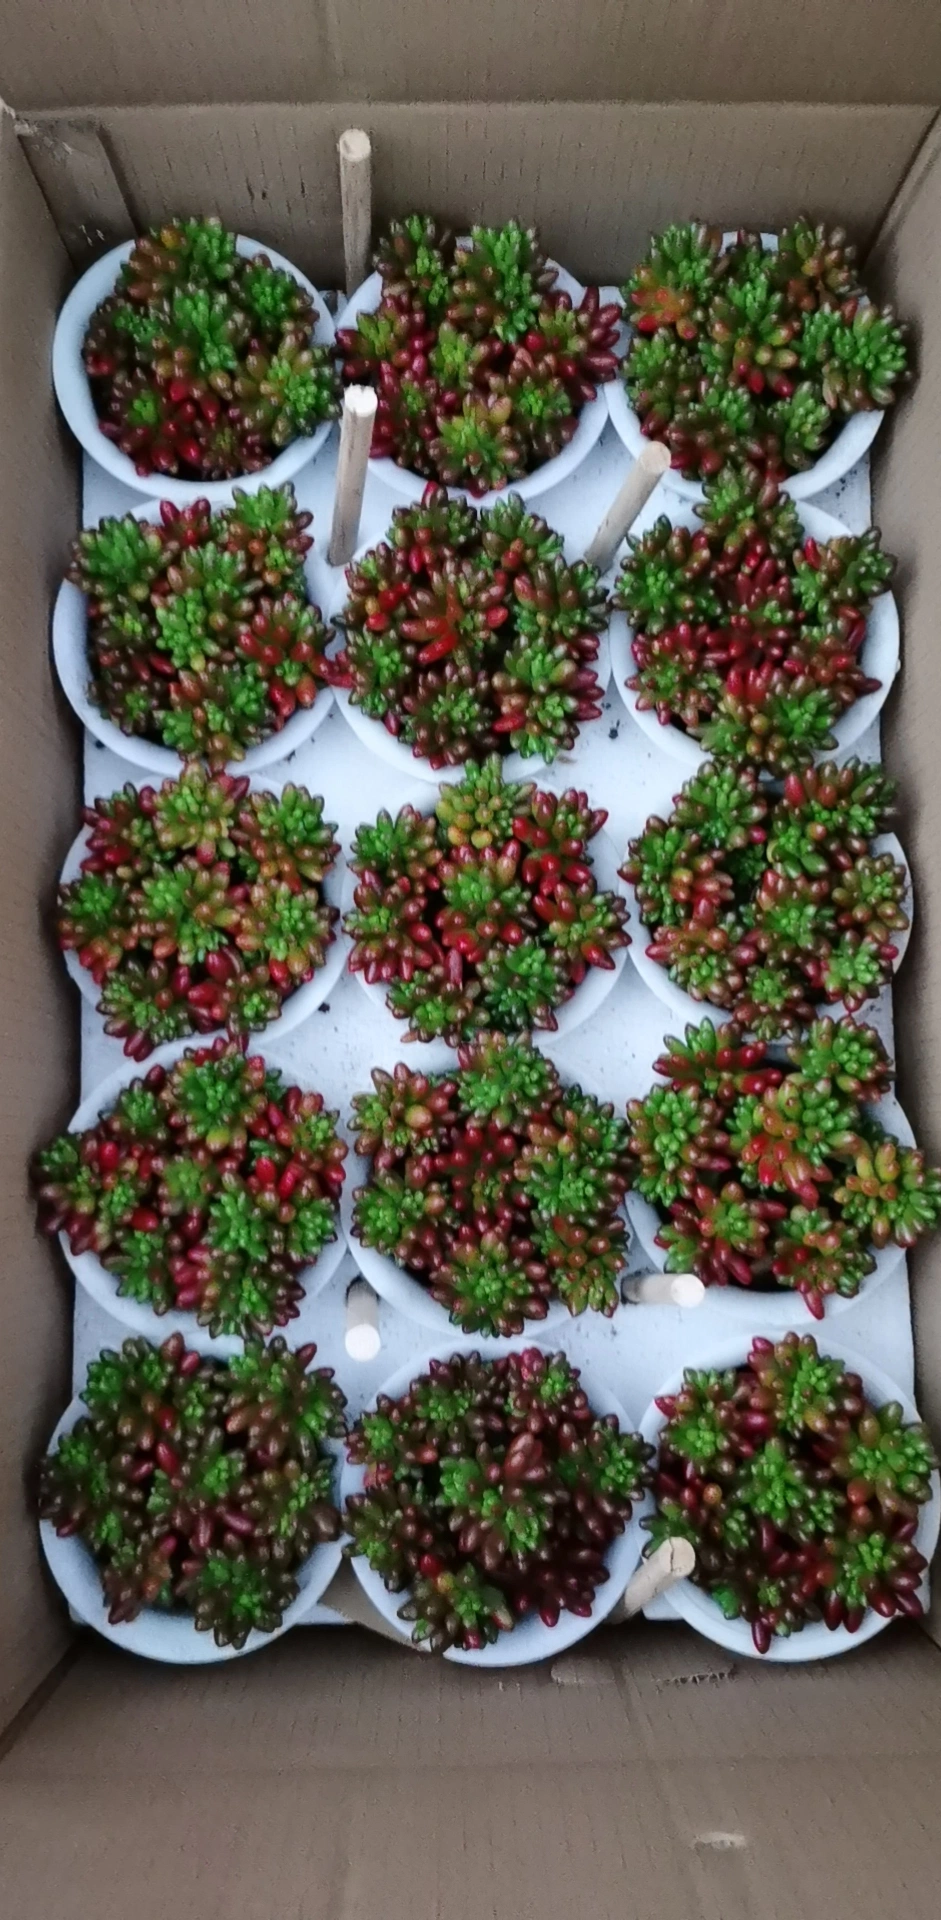 Wholesale Nursery Echeveria/Haworthia/Lithops/Aeonium/Cactus Colourful Rare Natural Live Succulent Plants Hongzhiyu